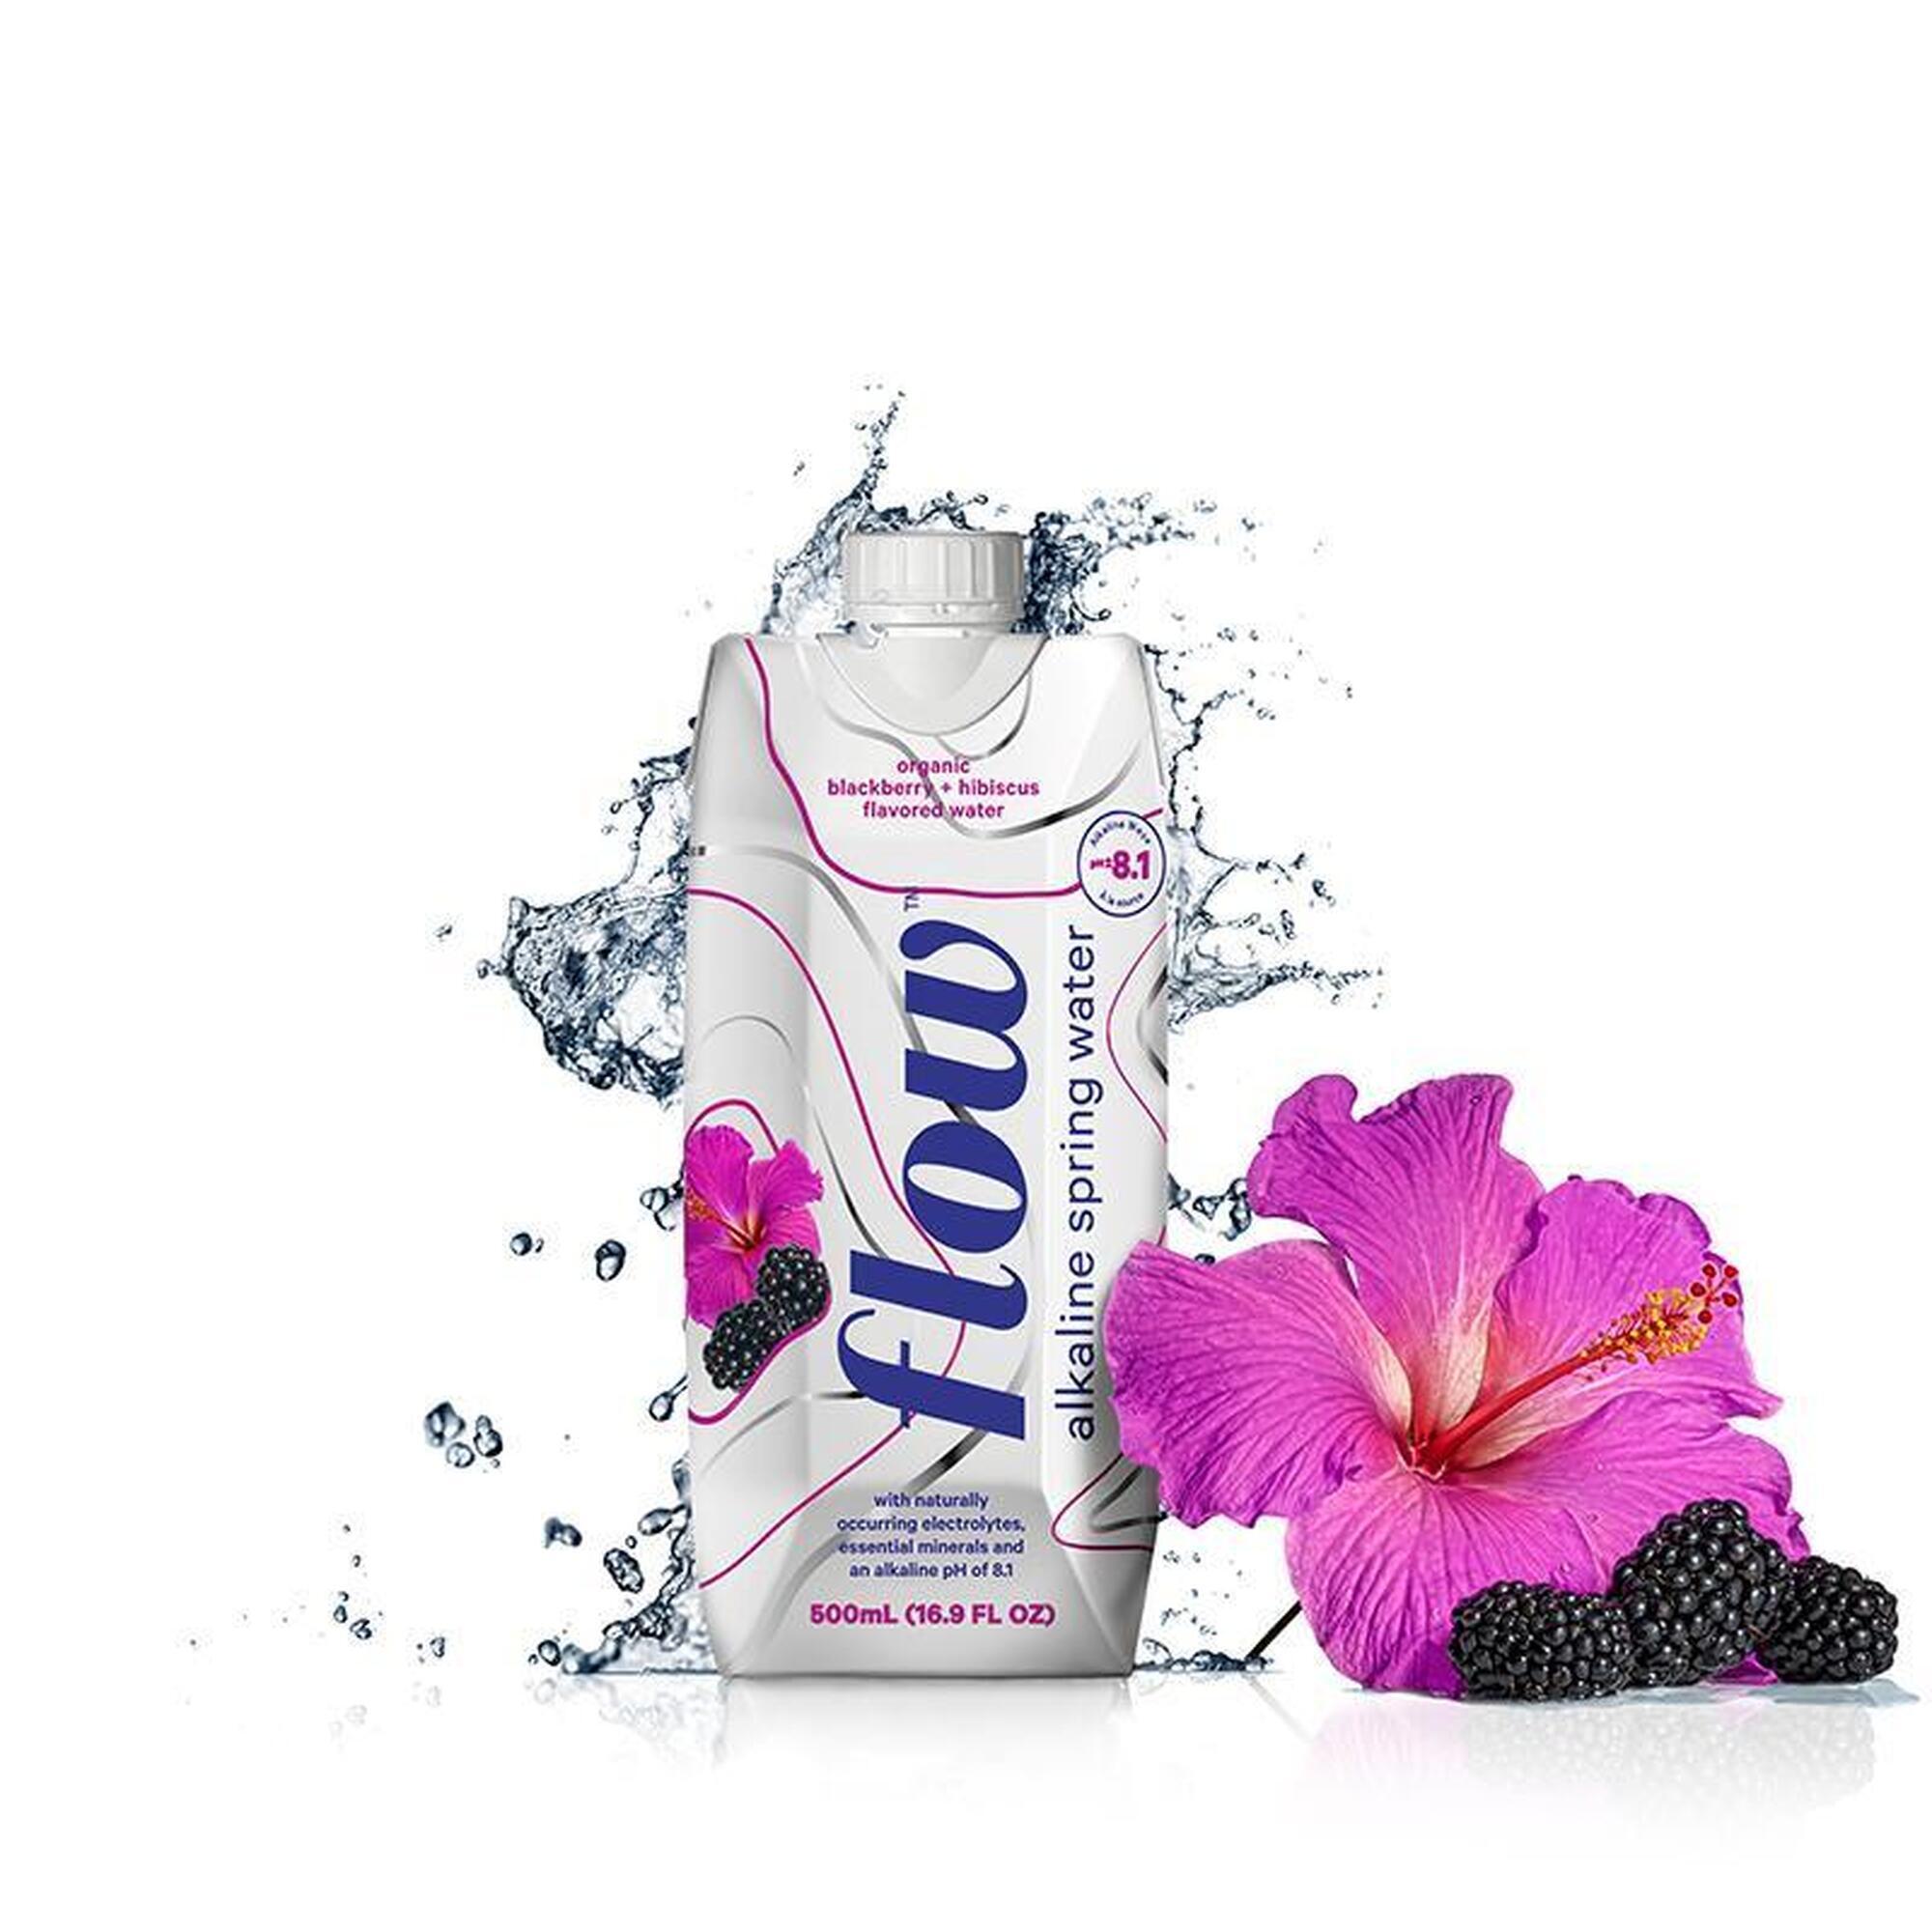 Flow Blackberry + Hisbiscus Alkaline Spring Water 12 pack of 500ml